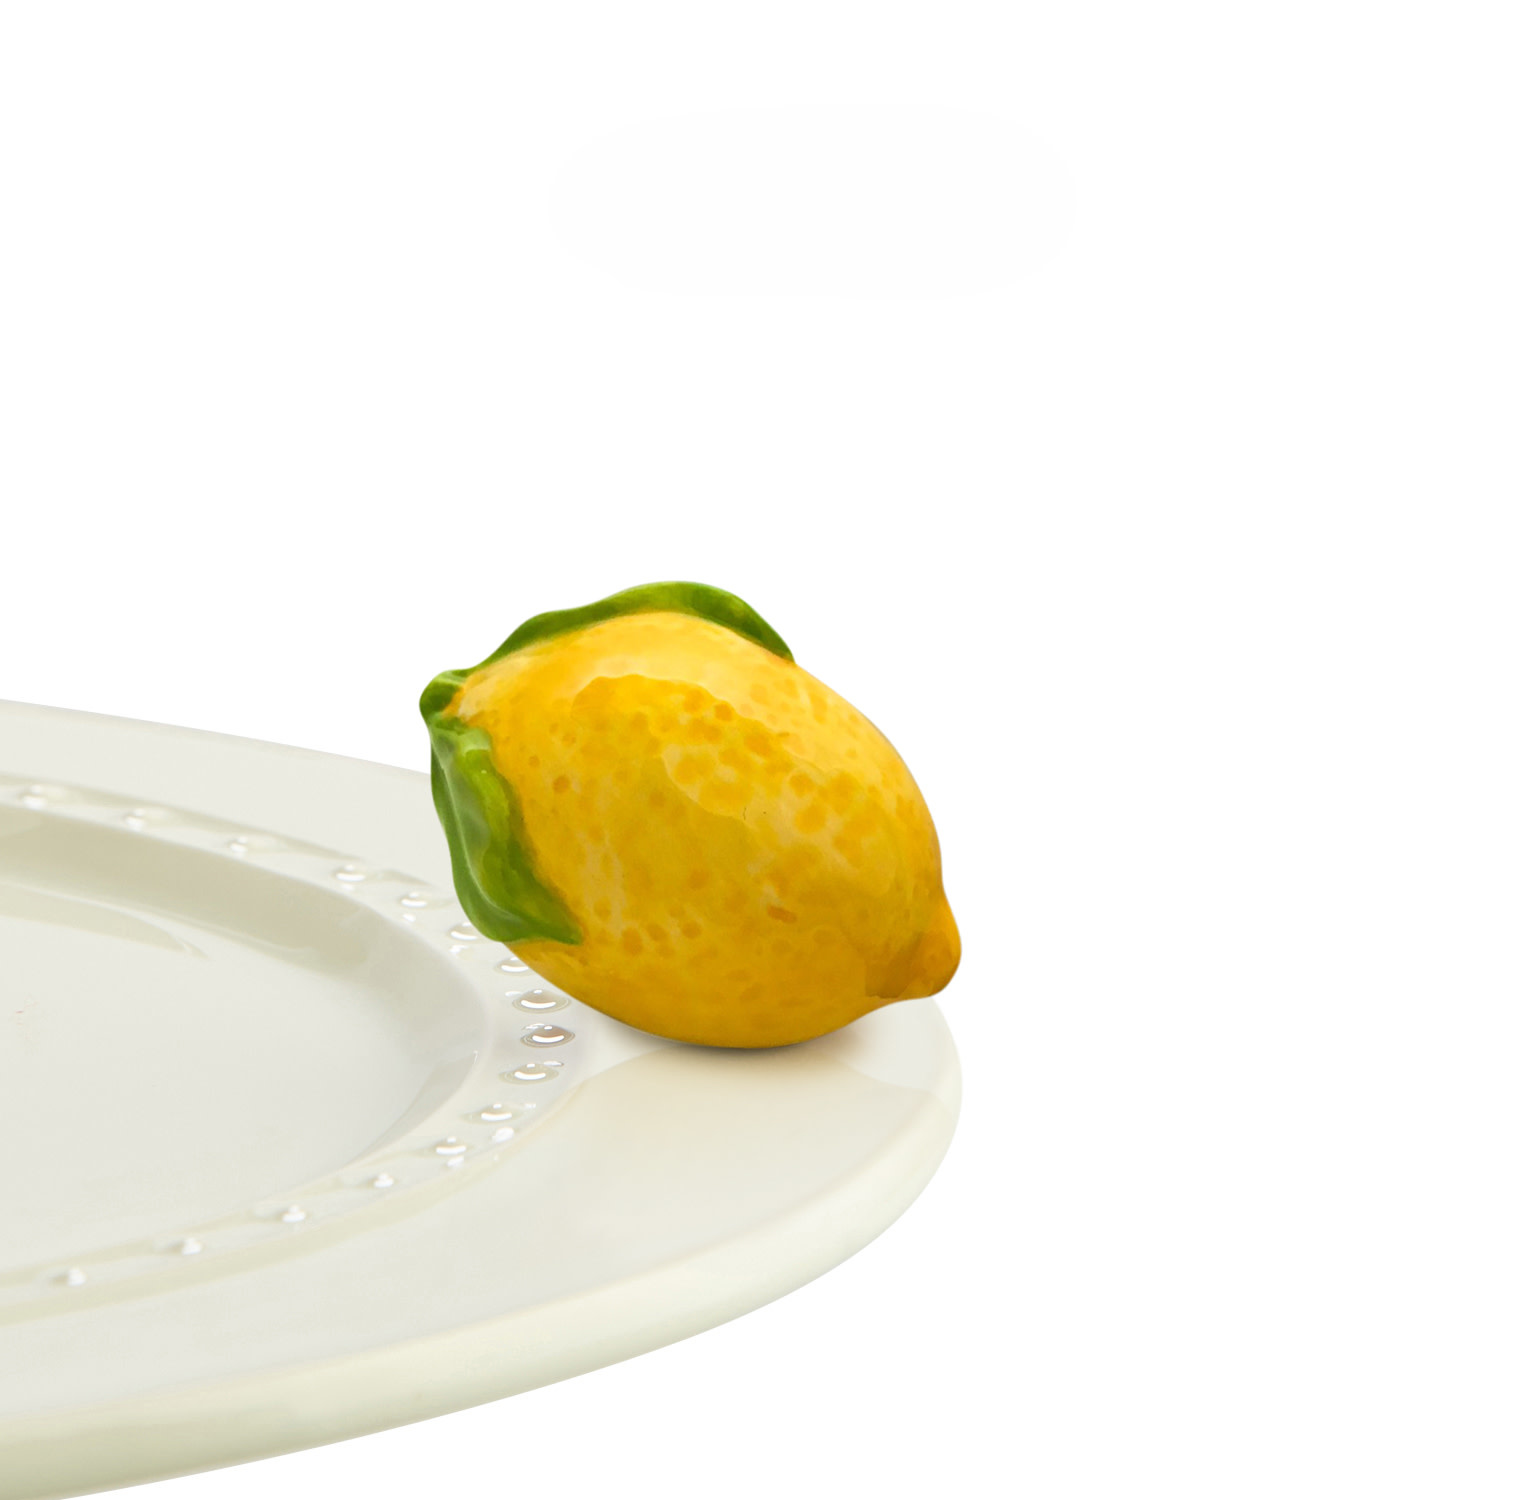 nora fleming lemon squeeze mini A203